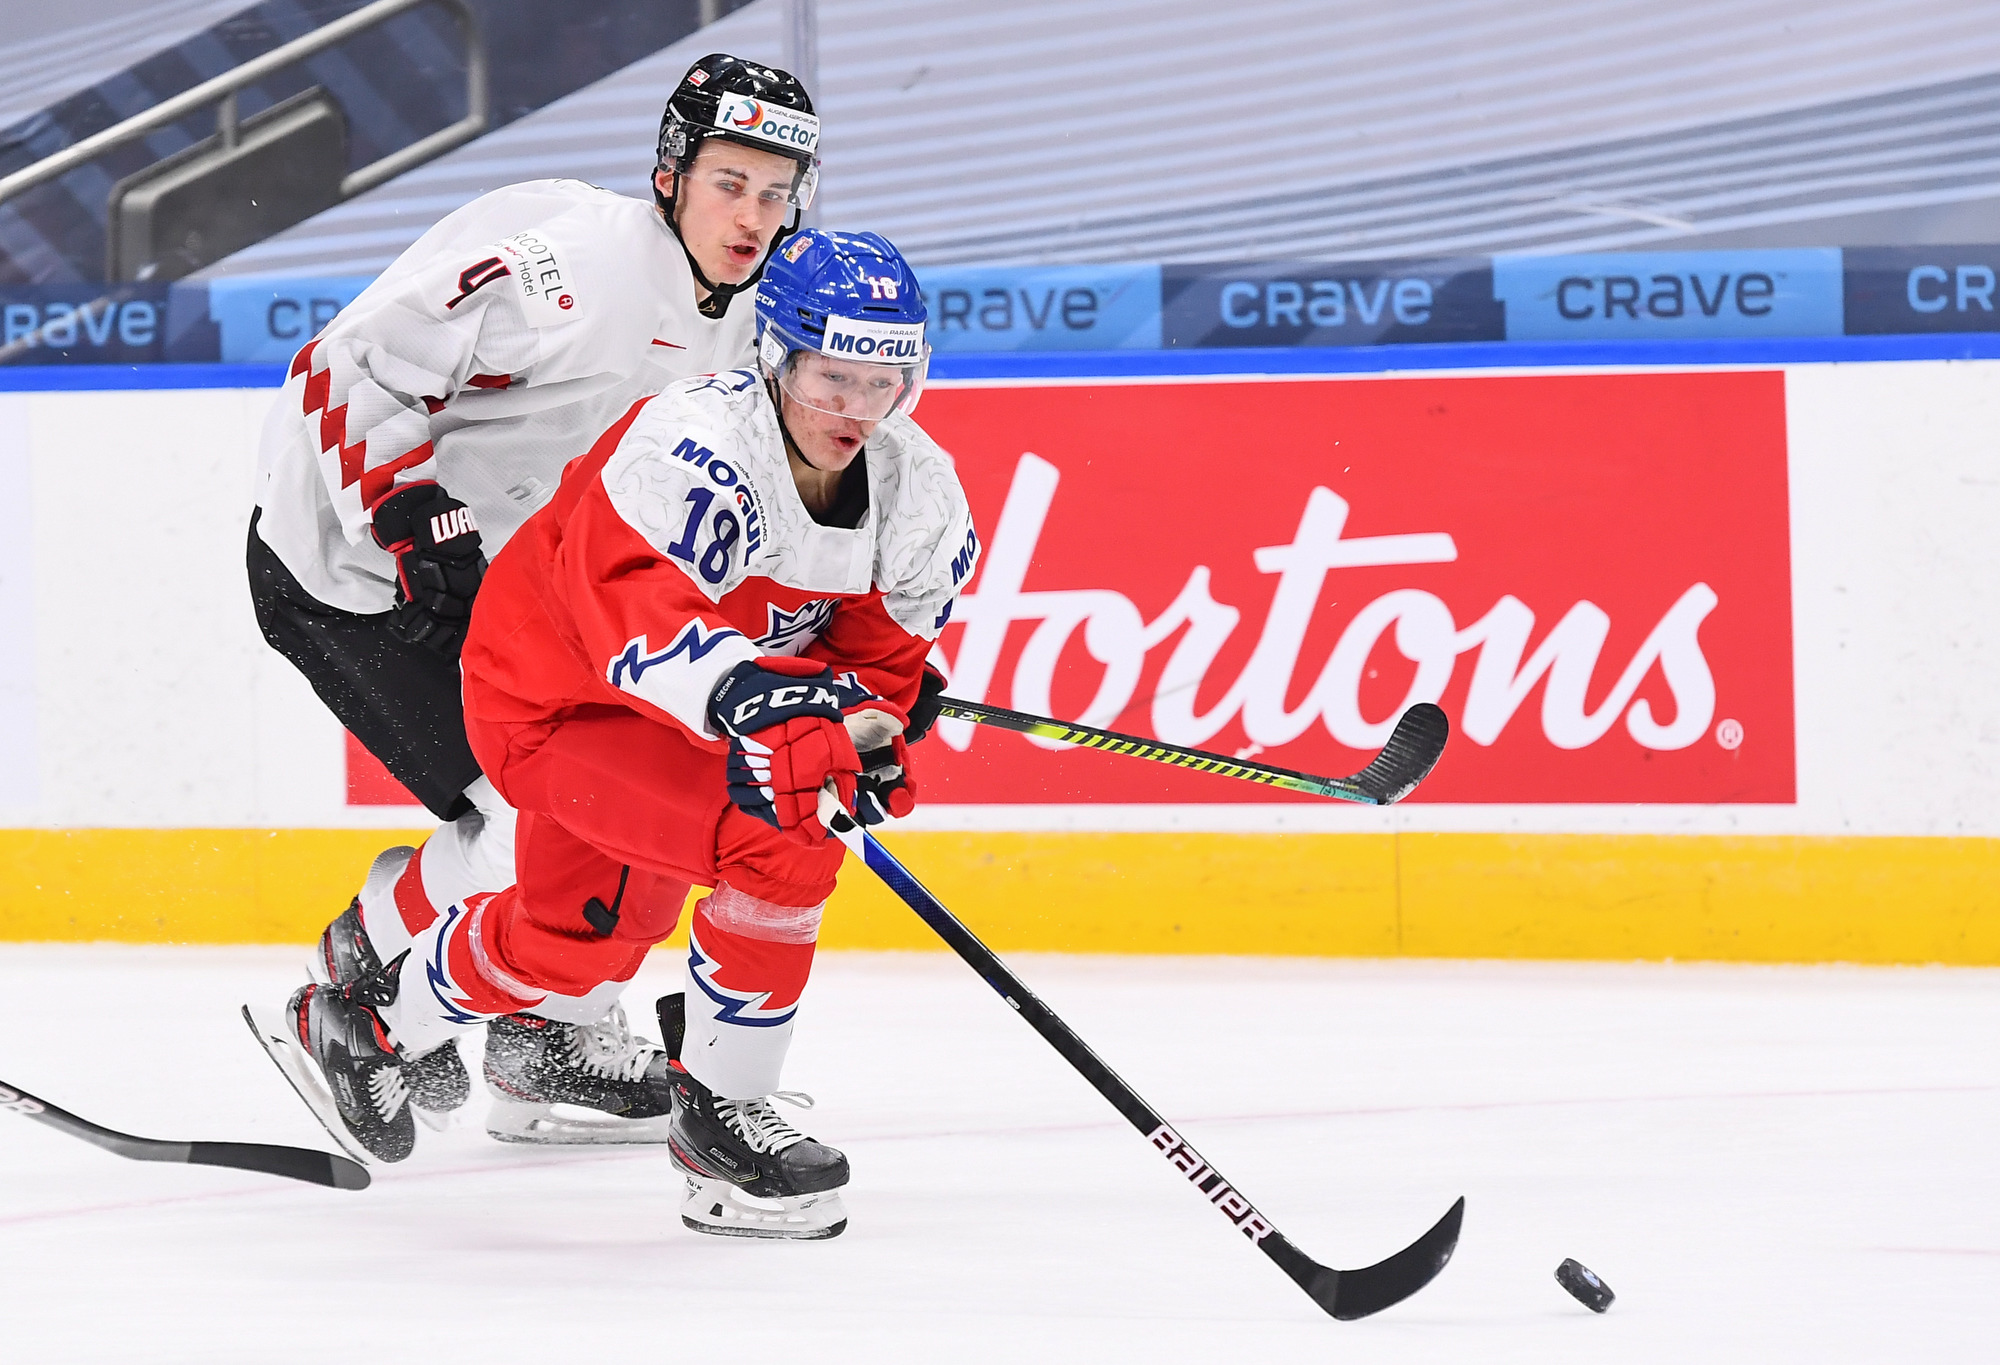 IIHF - Czechs on to quarters